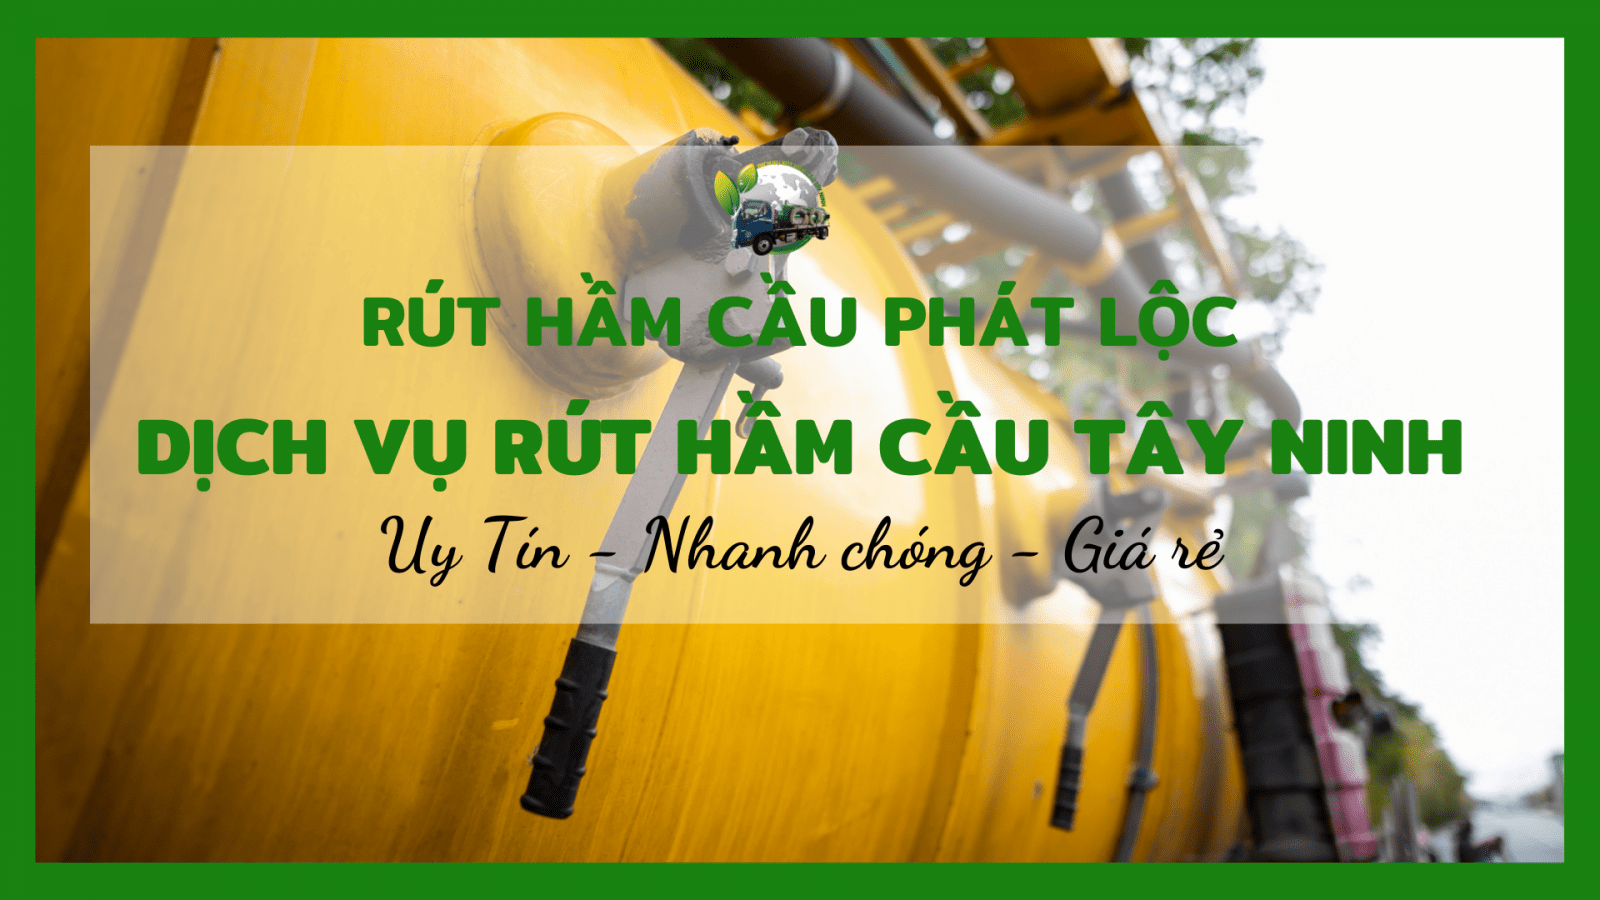 Hút hầm cầu Tây Ninh